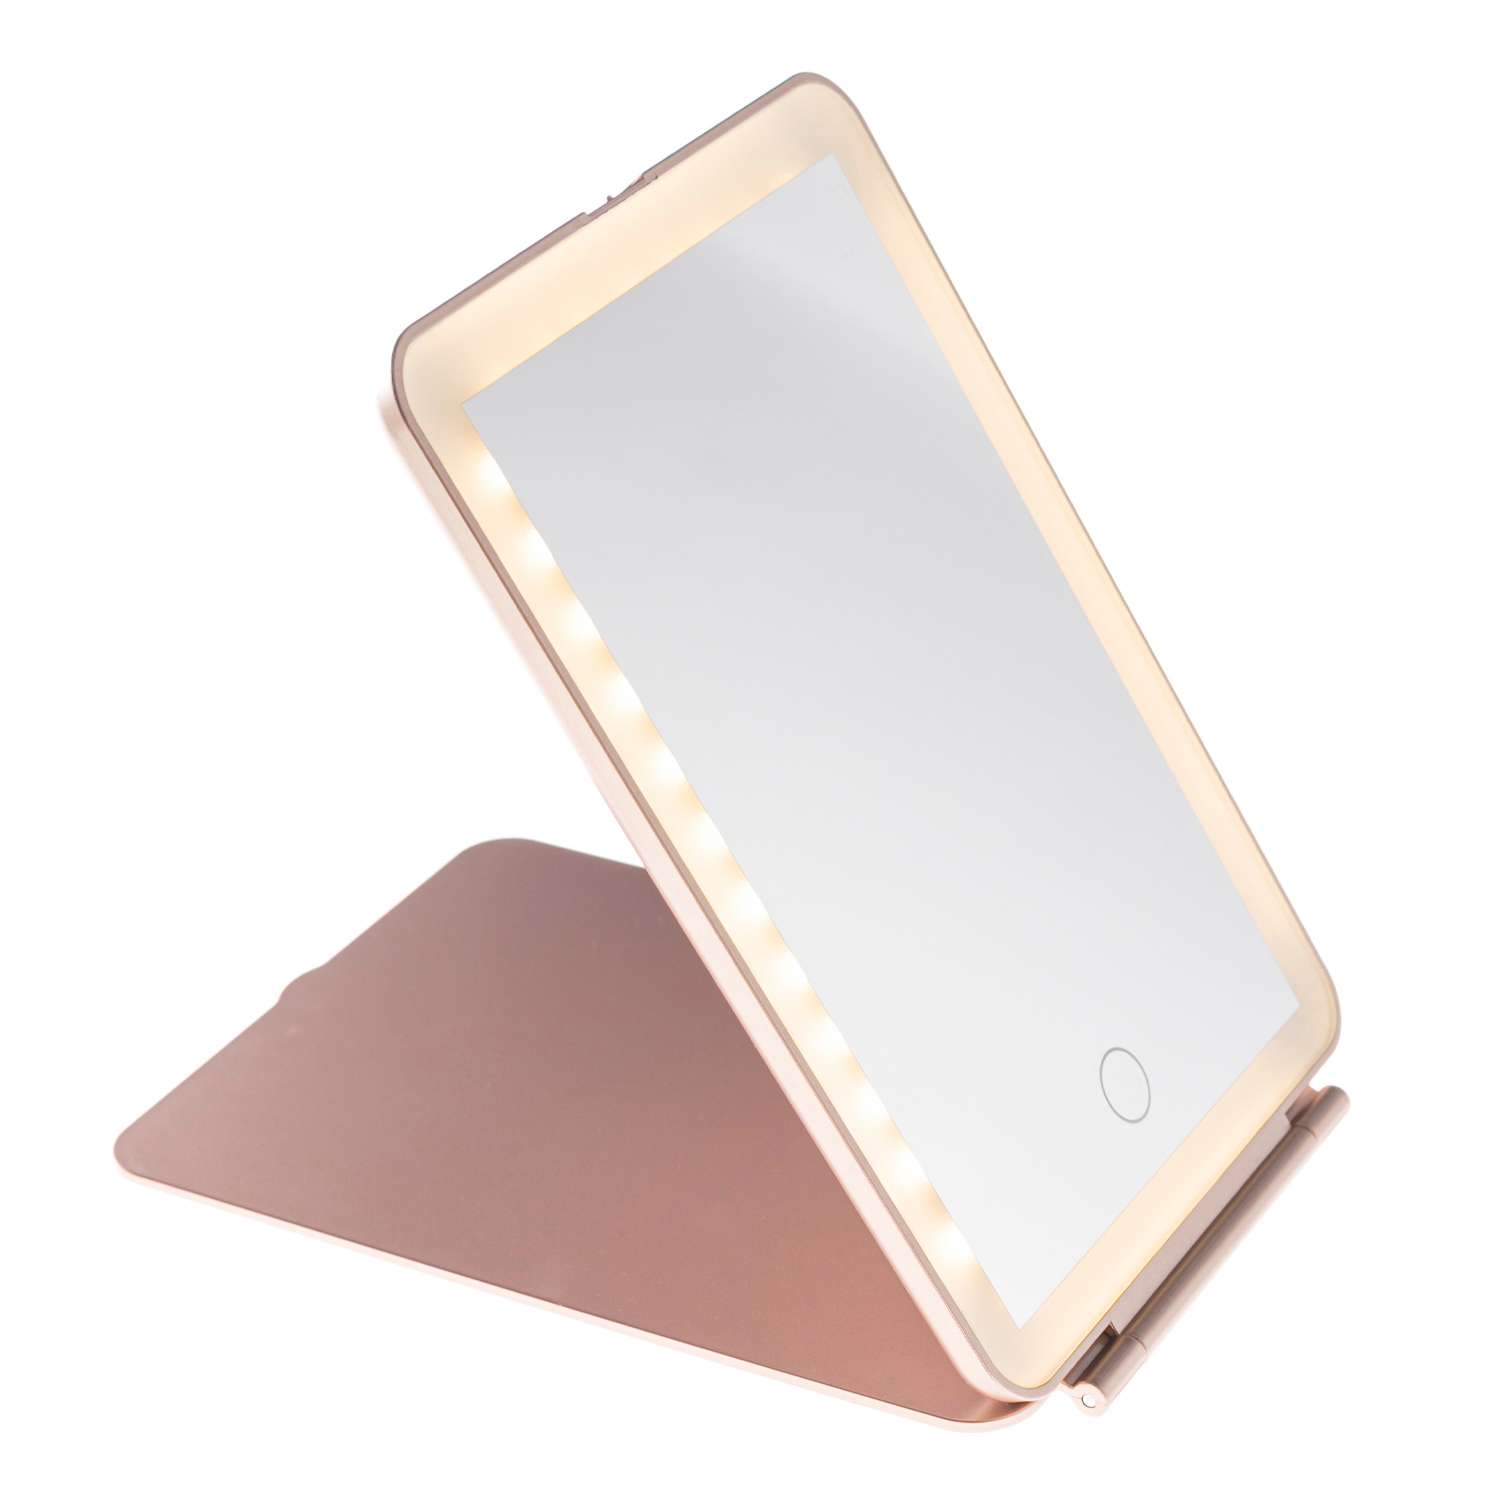 Зеркало косметическое CleverCare в форме планшета с LED подсветкой монохром цвет белый - фото 8